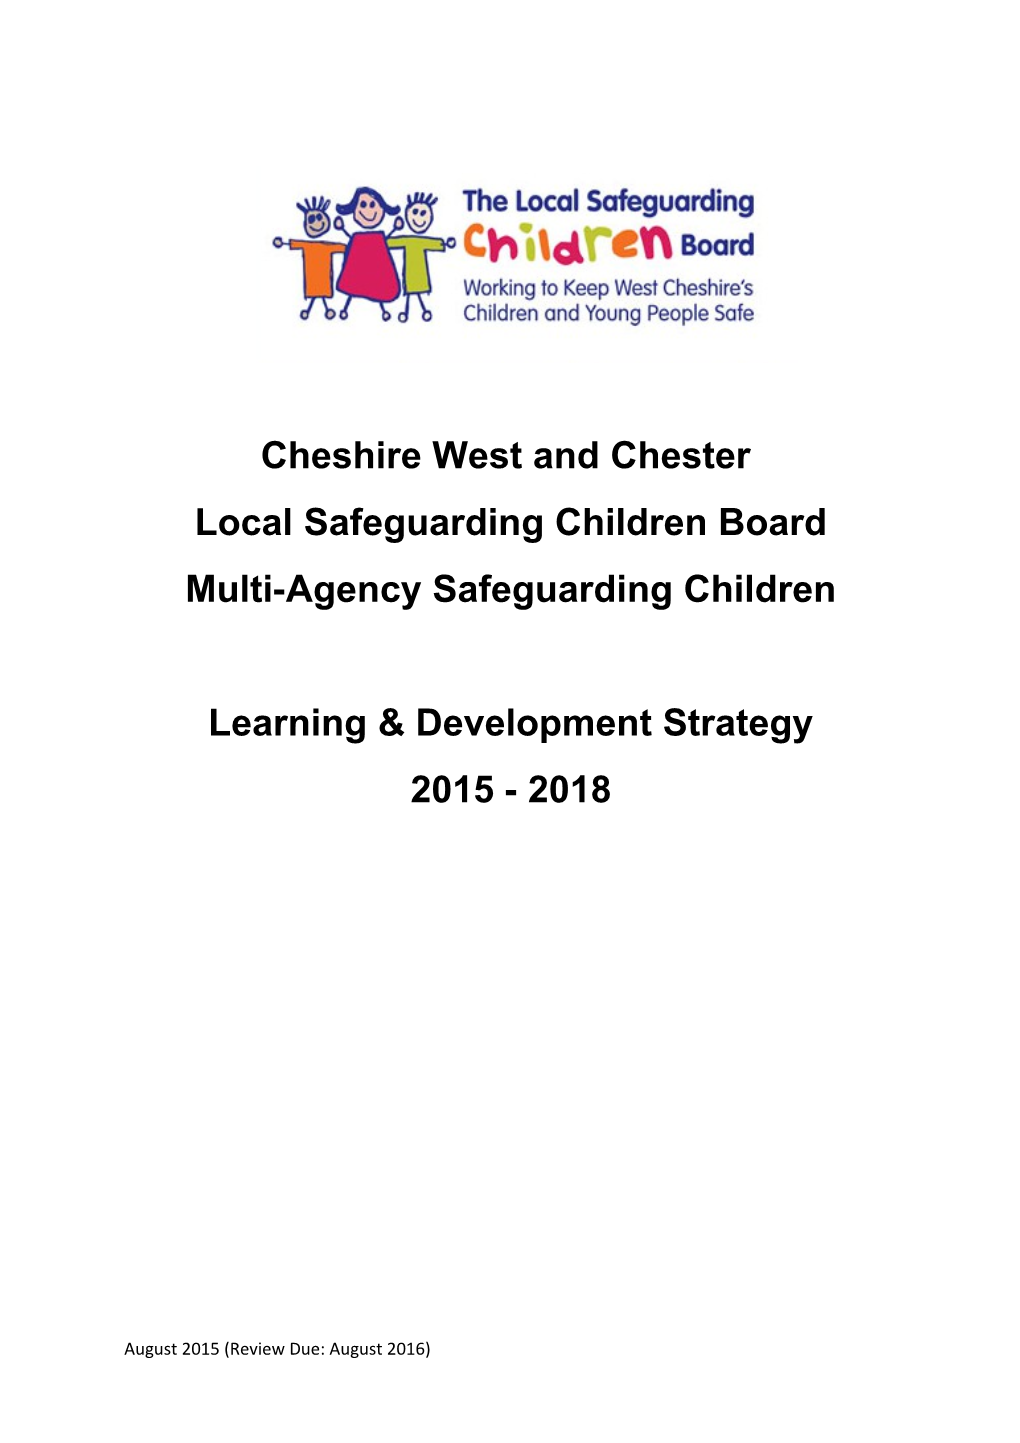 Multi-Agency Safeguarding Children Learning & Development Strategy 2014-17